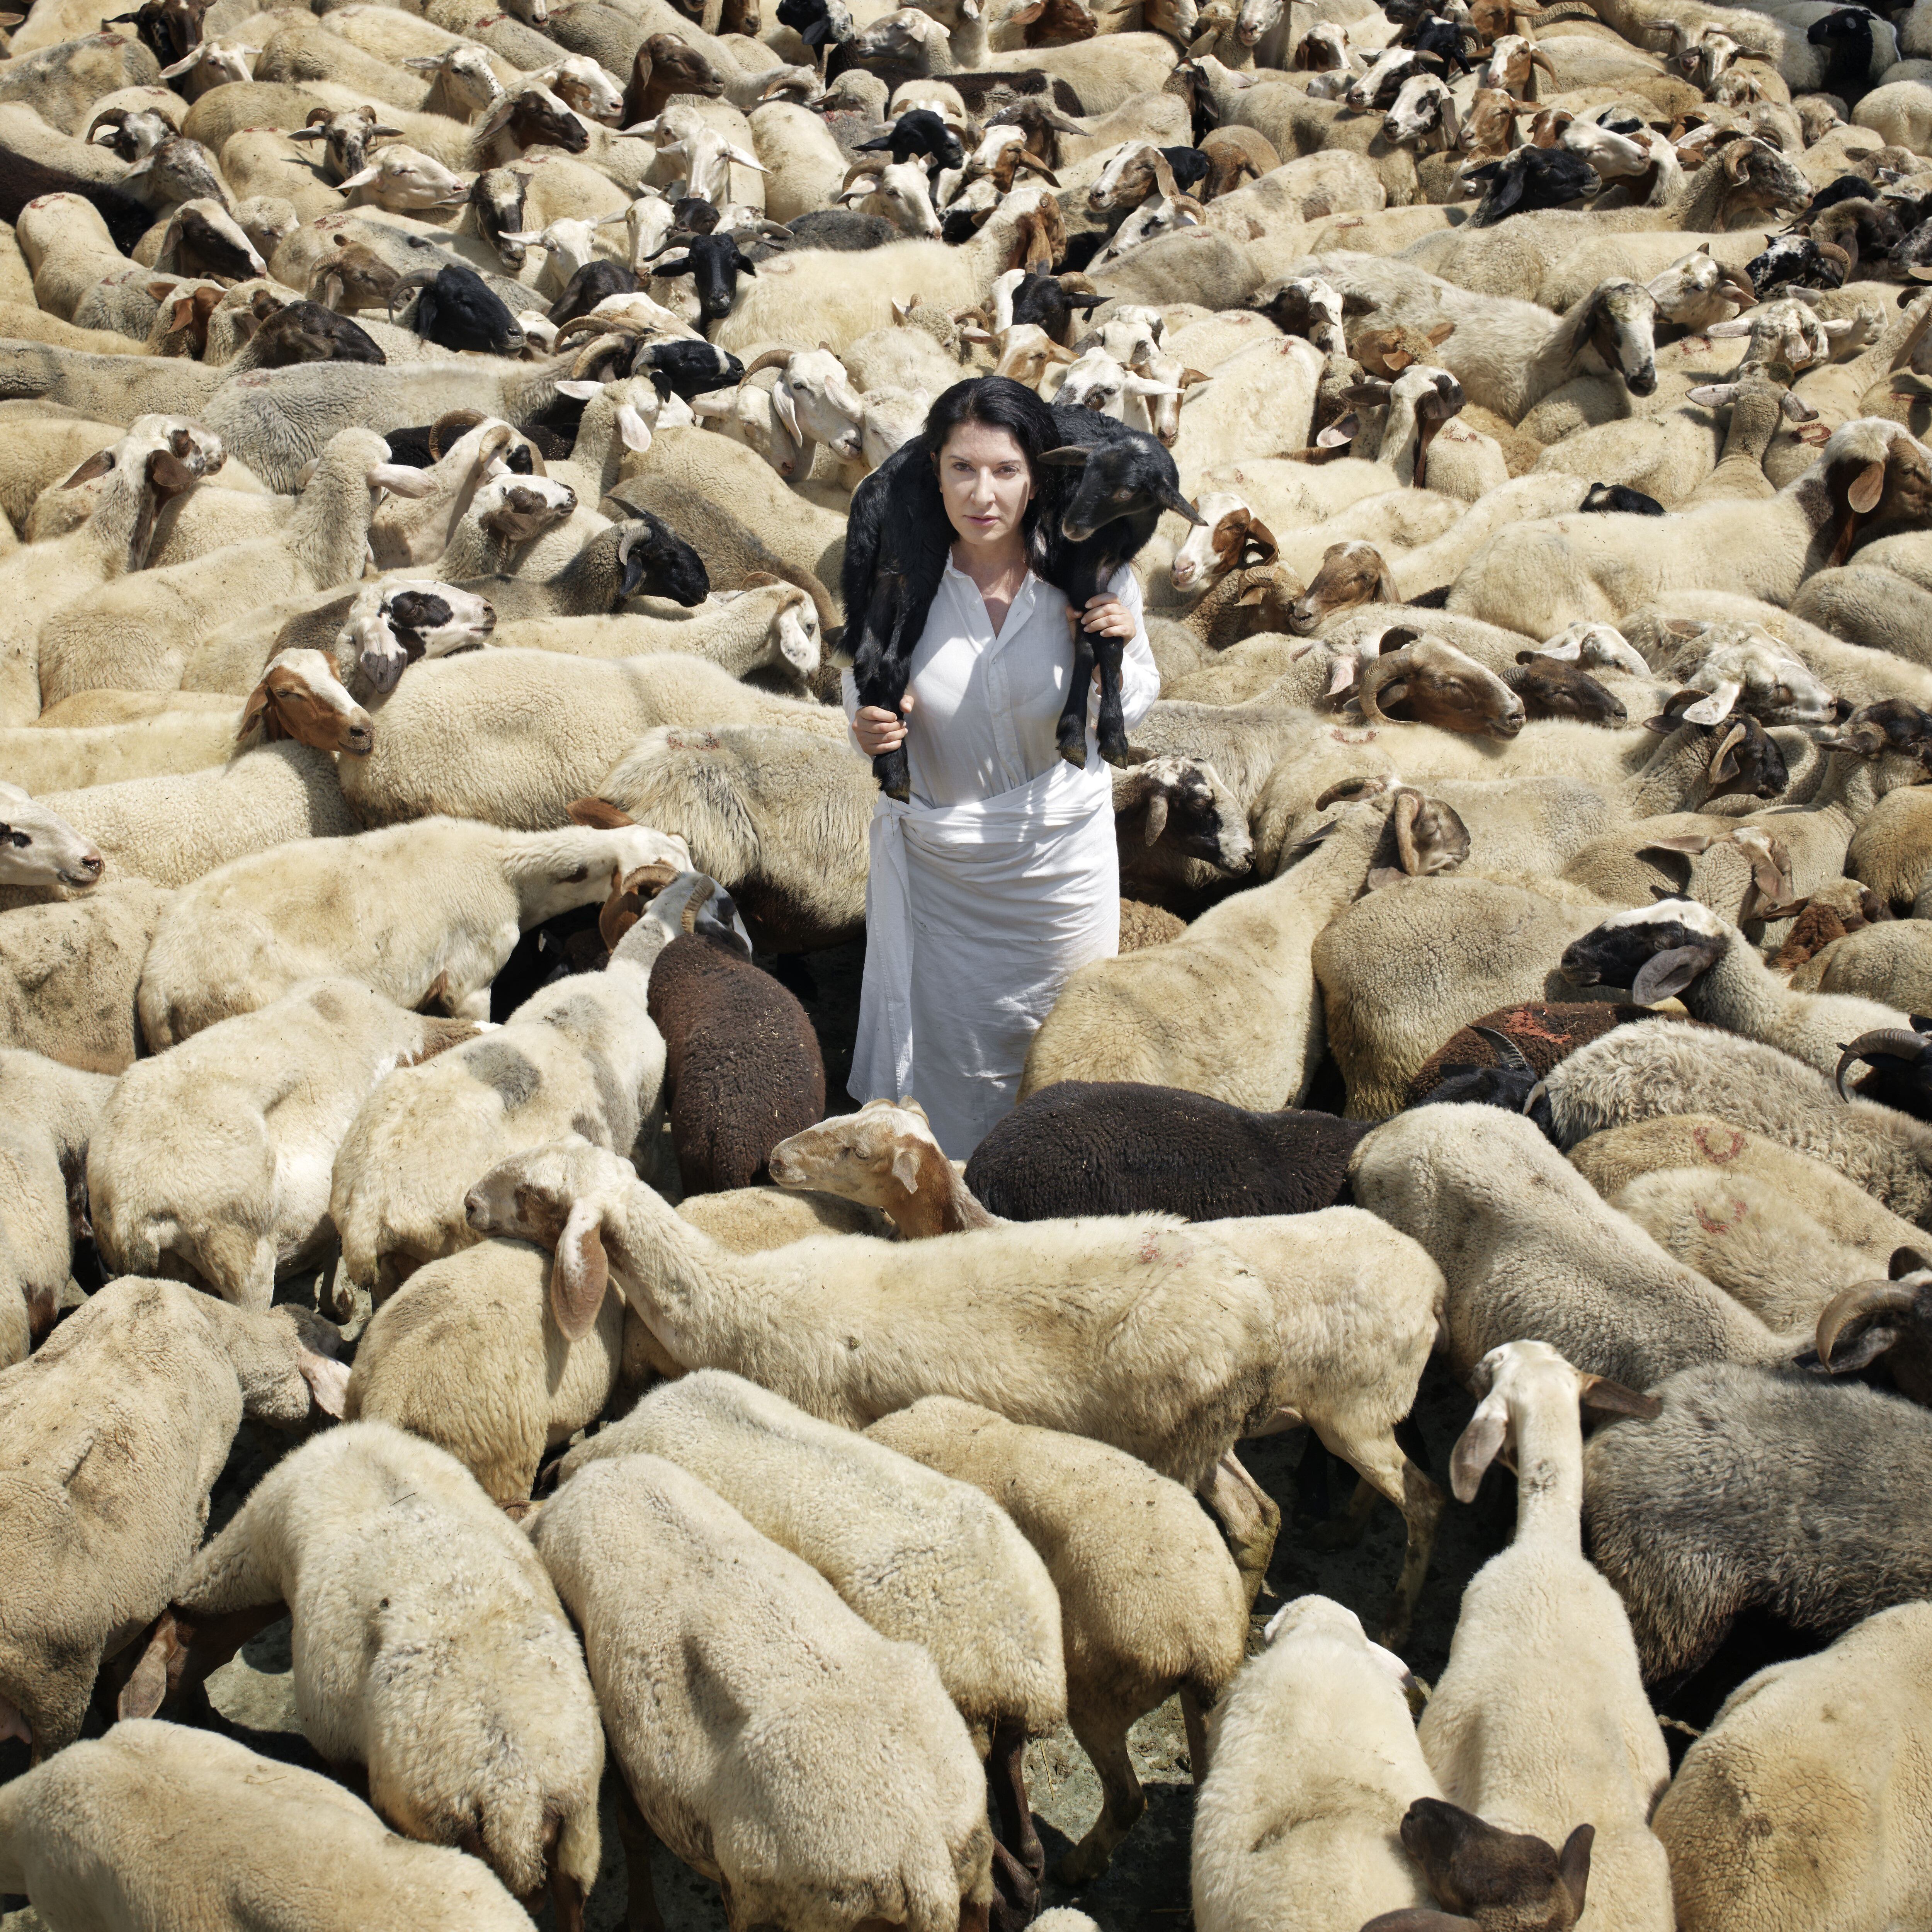 Fotografía titulada 'Black Sheep' (Oveja negra), de Marina Abramovic.